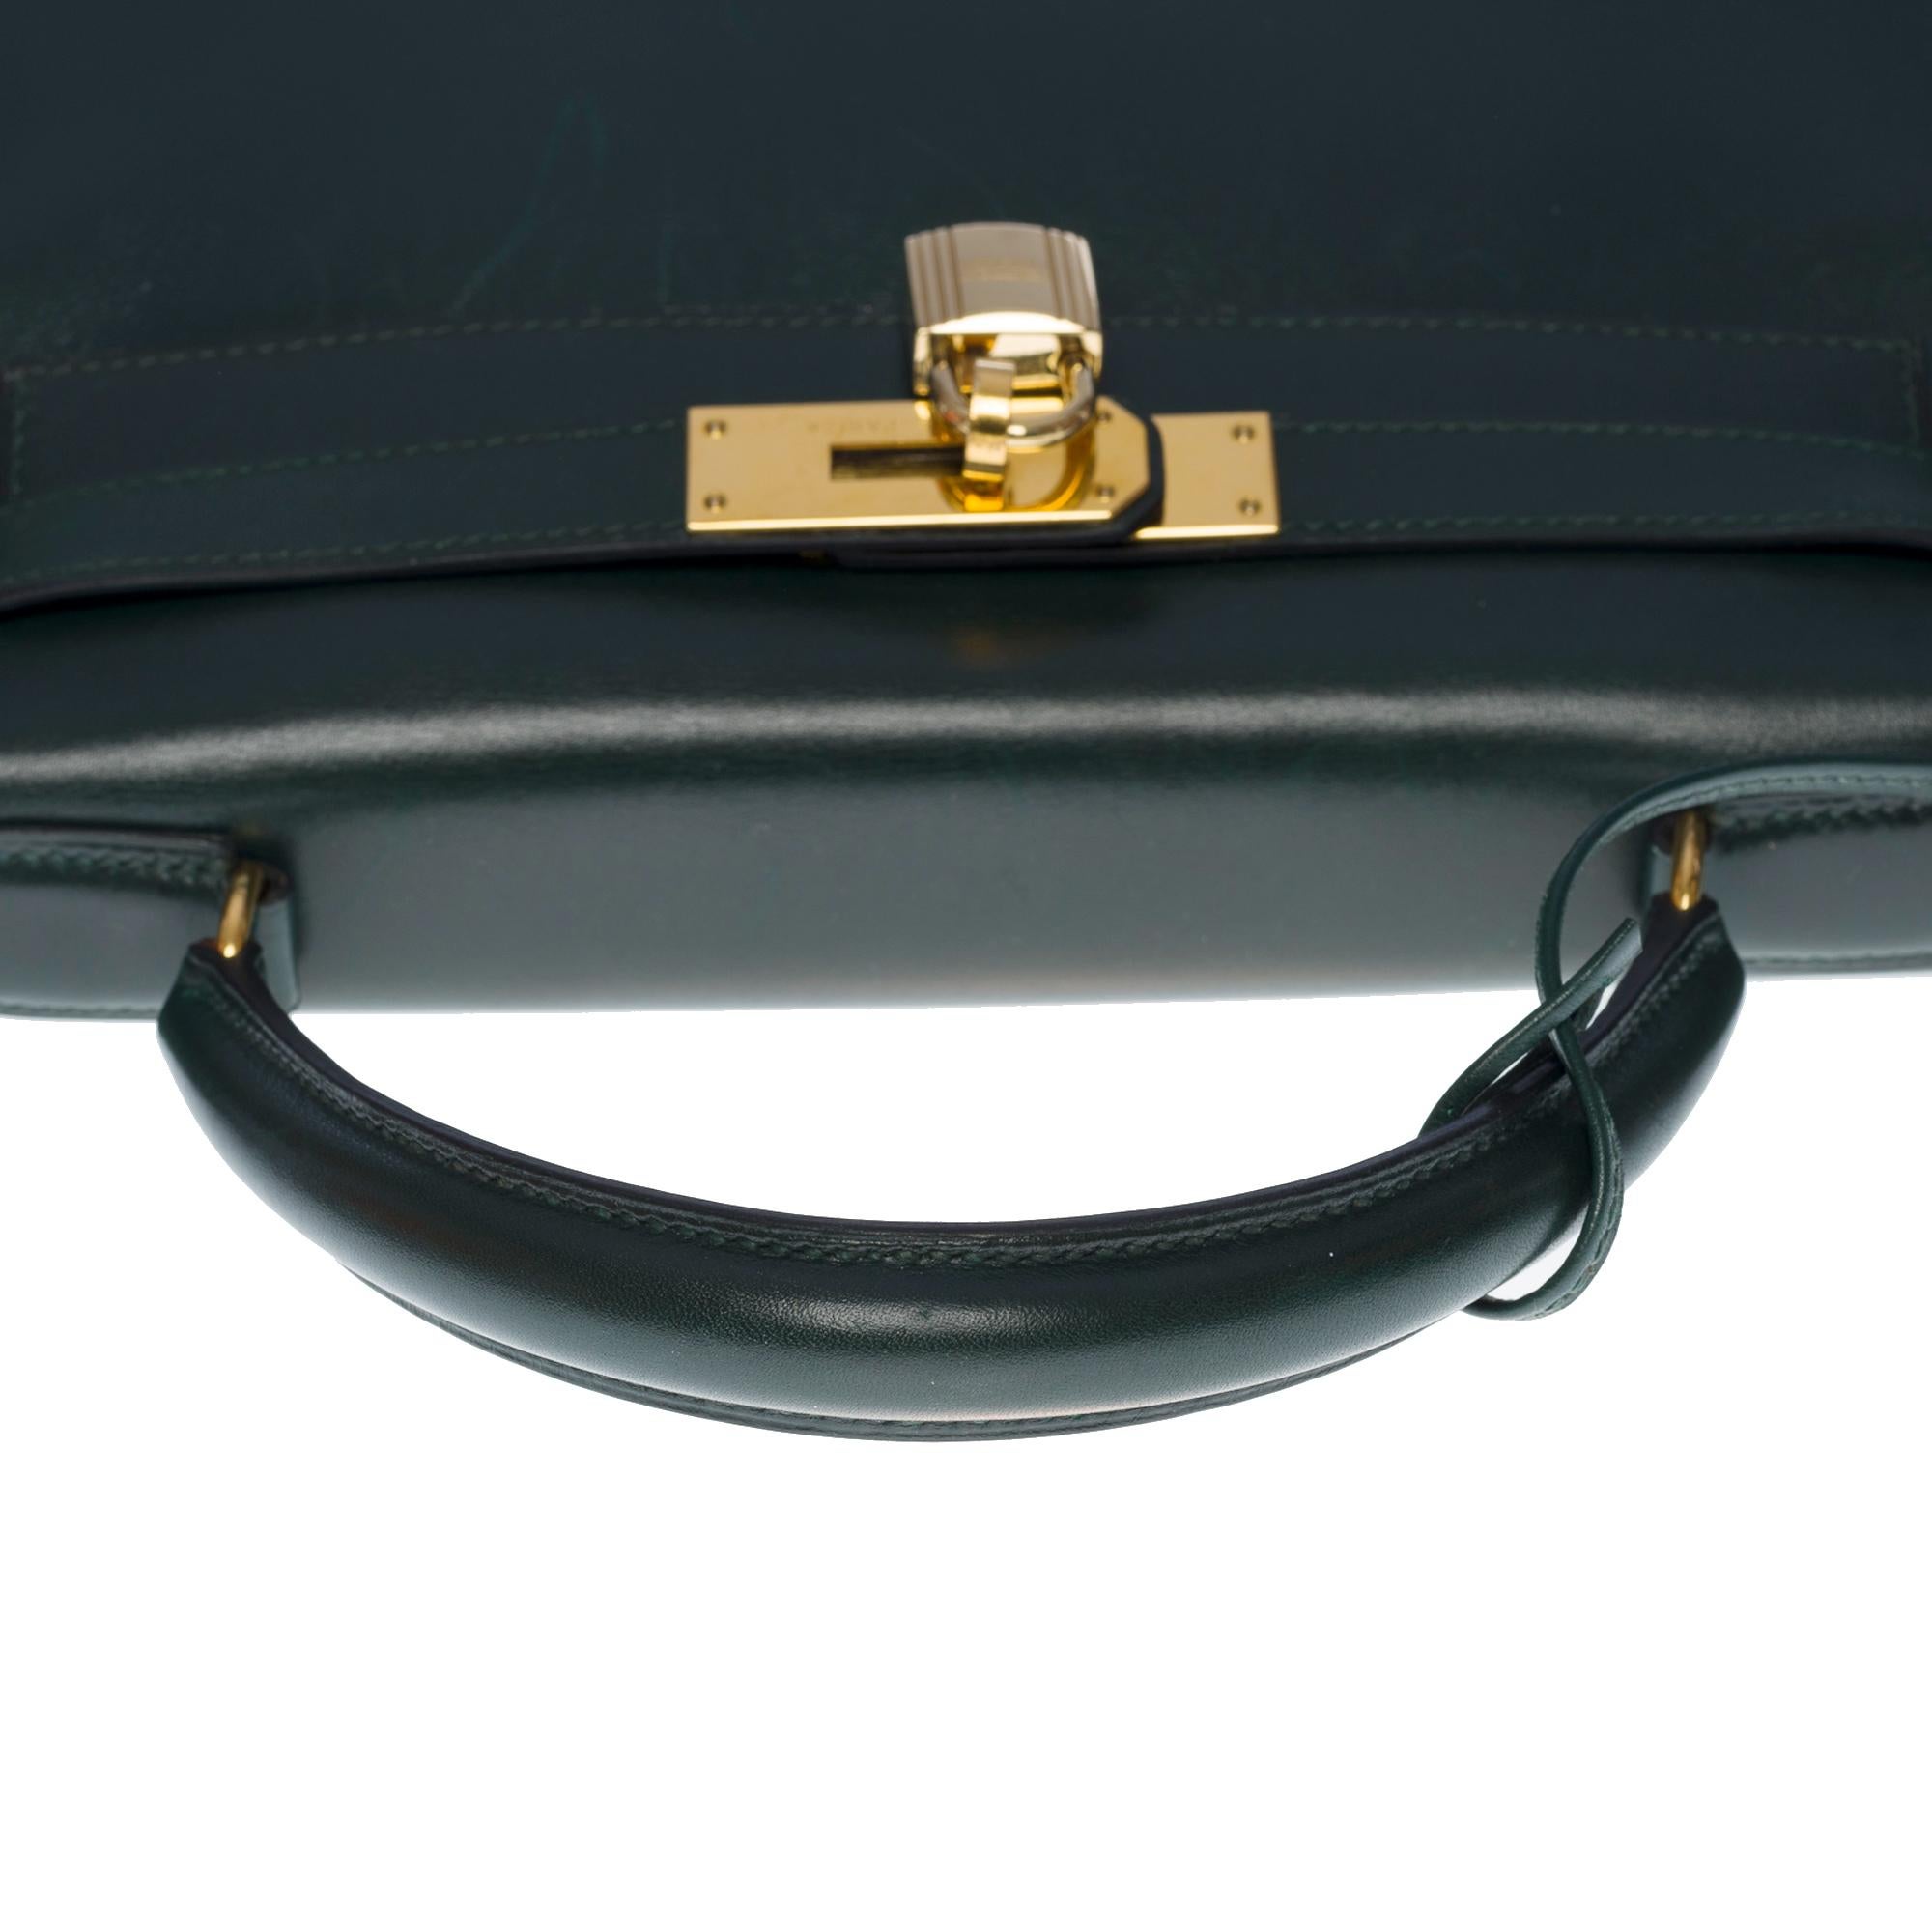 Rare Hermès Kelly 28 retourne handbag strap in green box calf leather, GHW 4